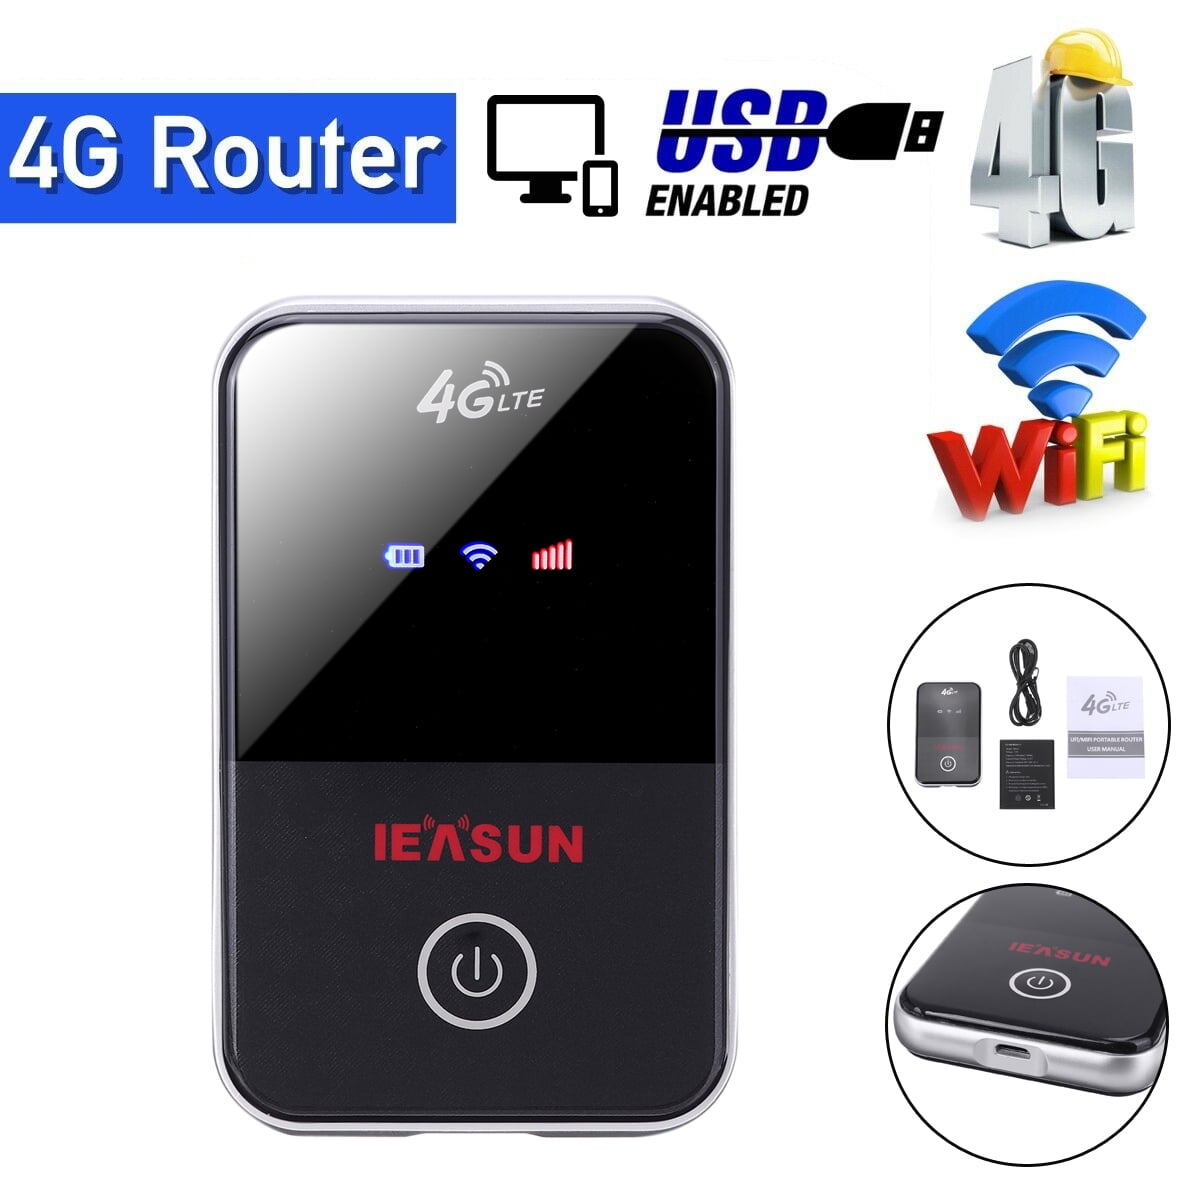 IEASUN Wireless WiFi Travel Router, Portable Hotspot MiFi 4G Wireless